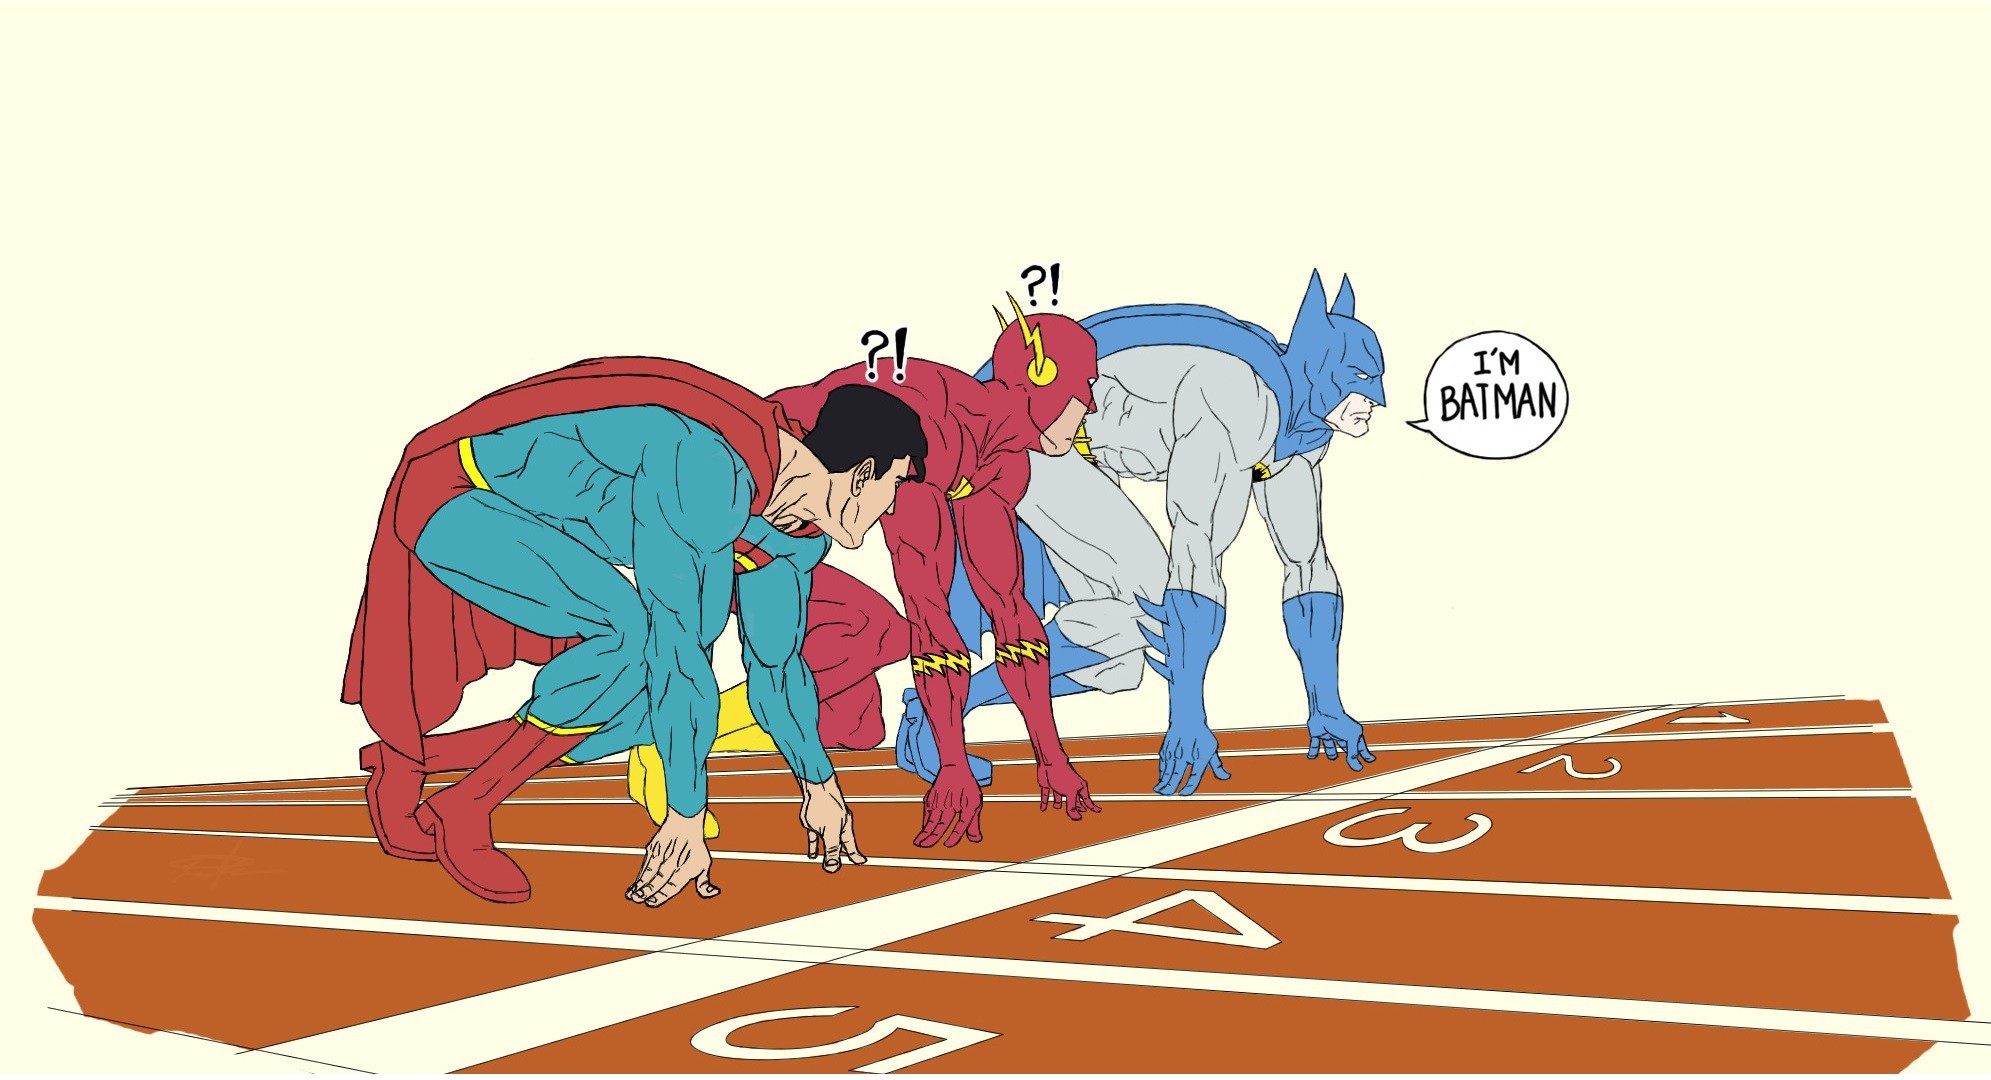 Batman Superman Fun Art Race Free Awesome Image For Mobile